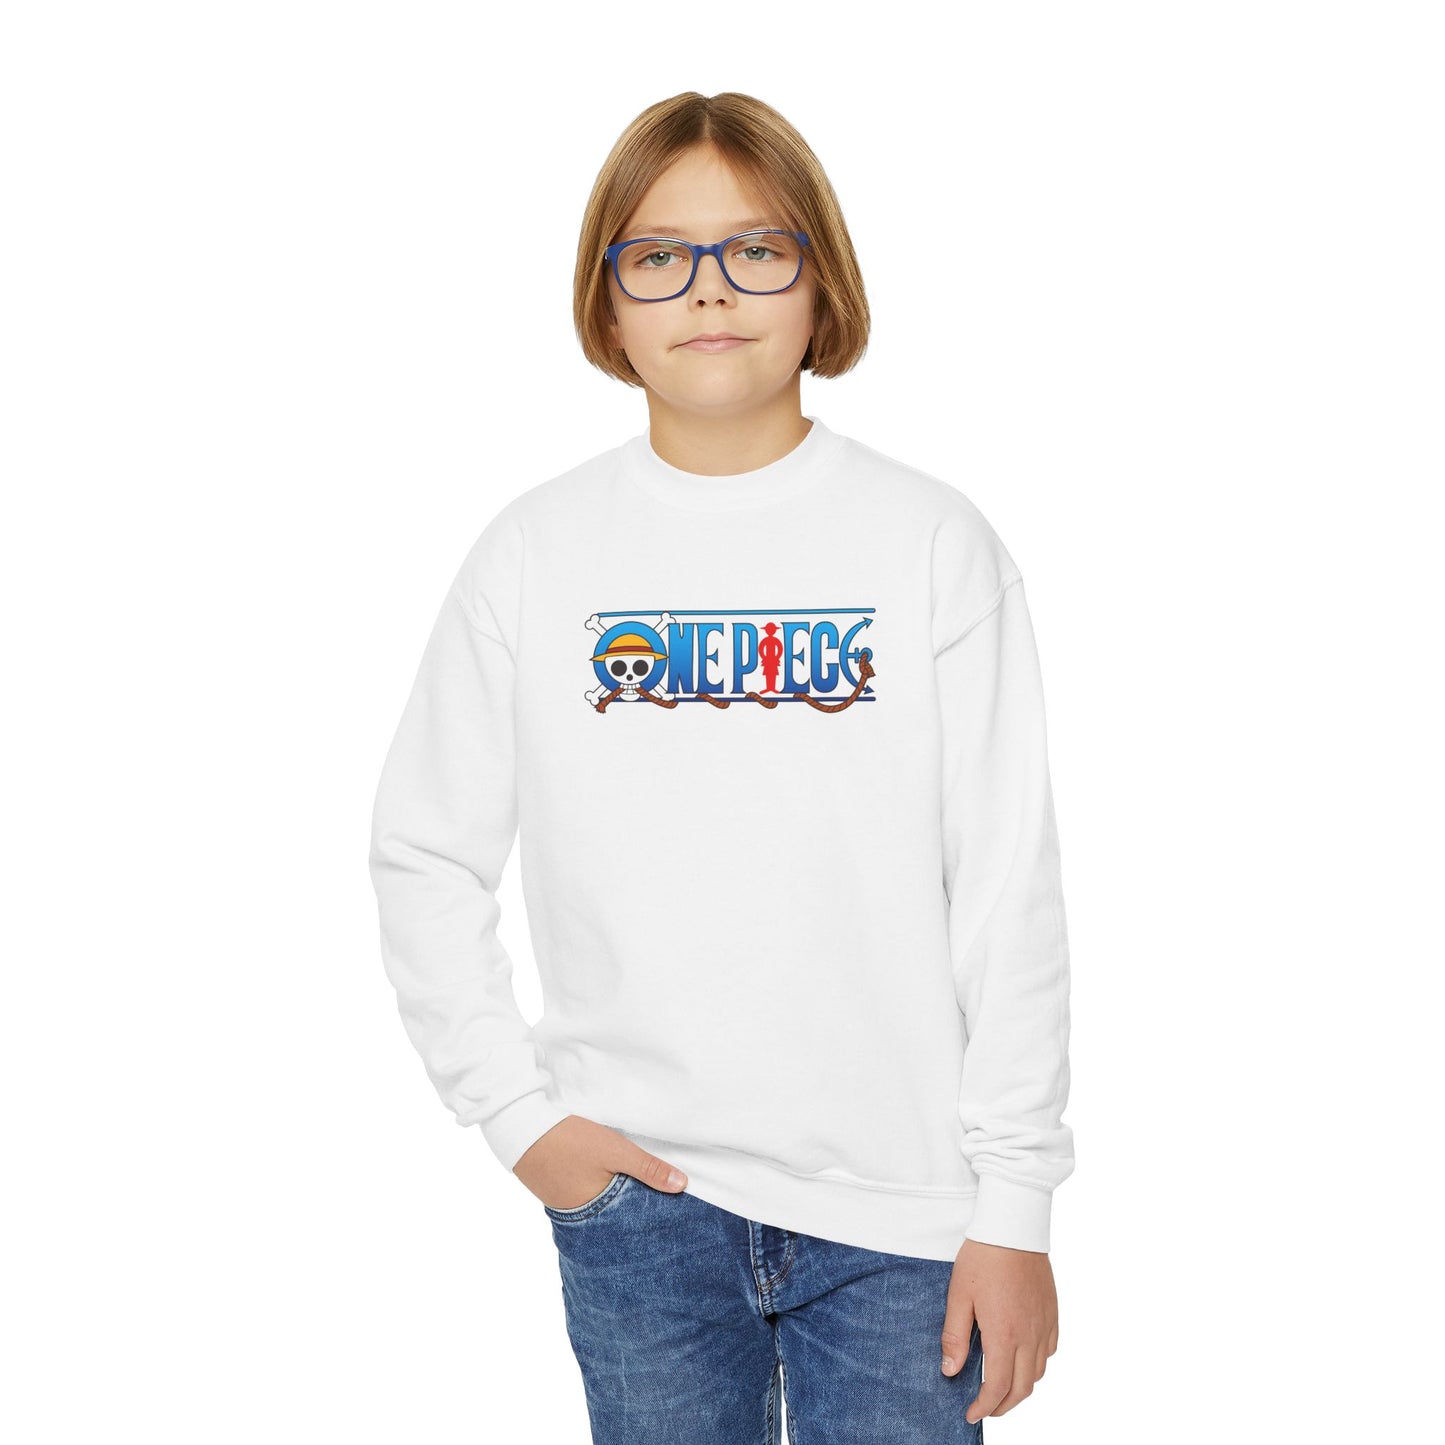 One Piece Anime Youth Sweatshirt